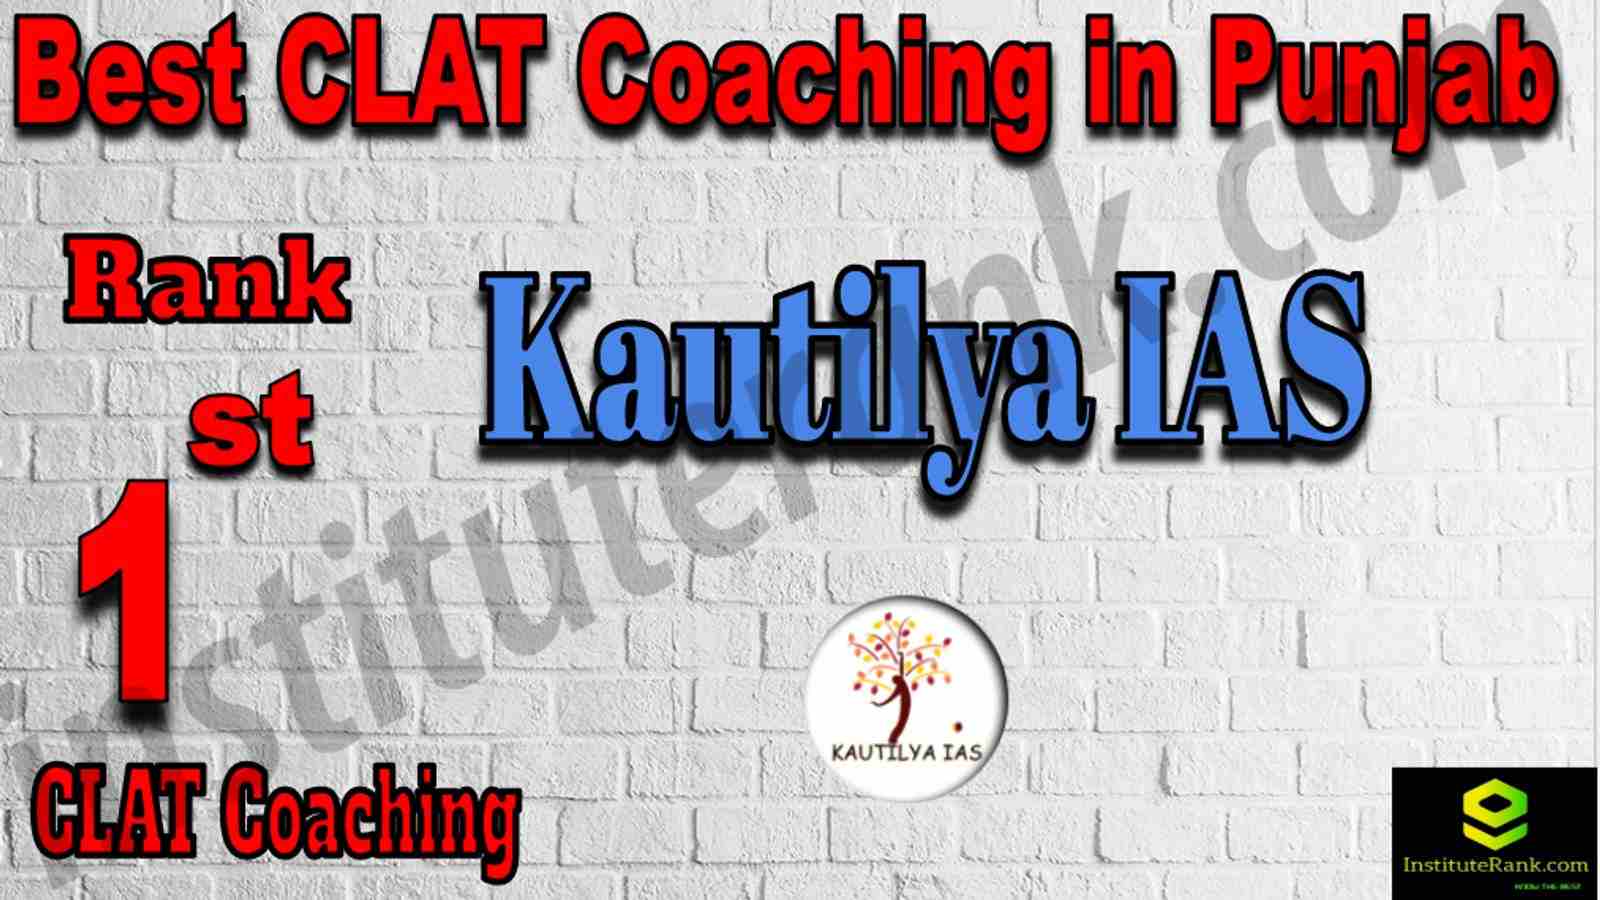 1st Best Clat Coaching in Punjab